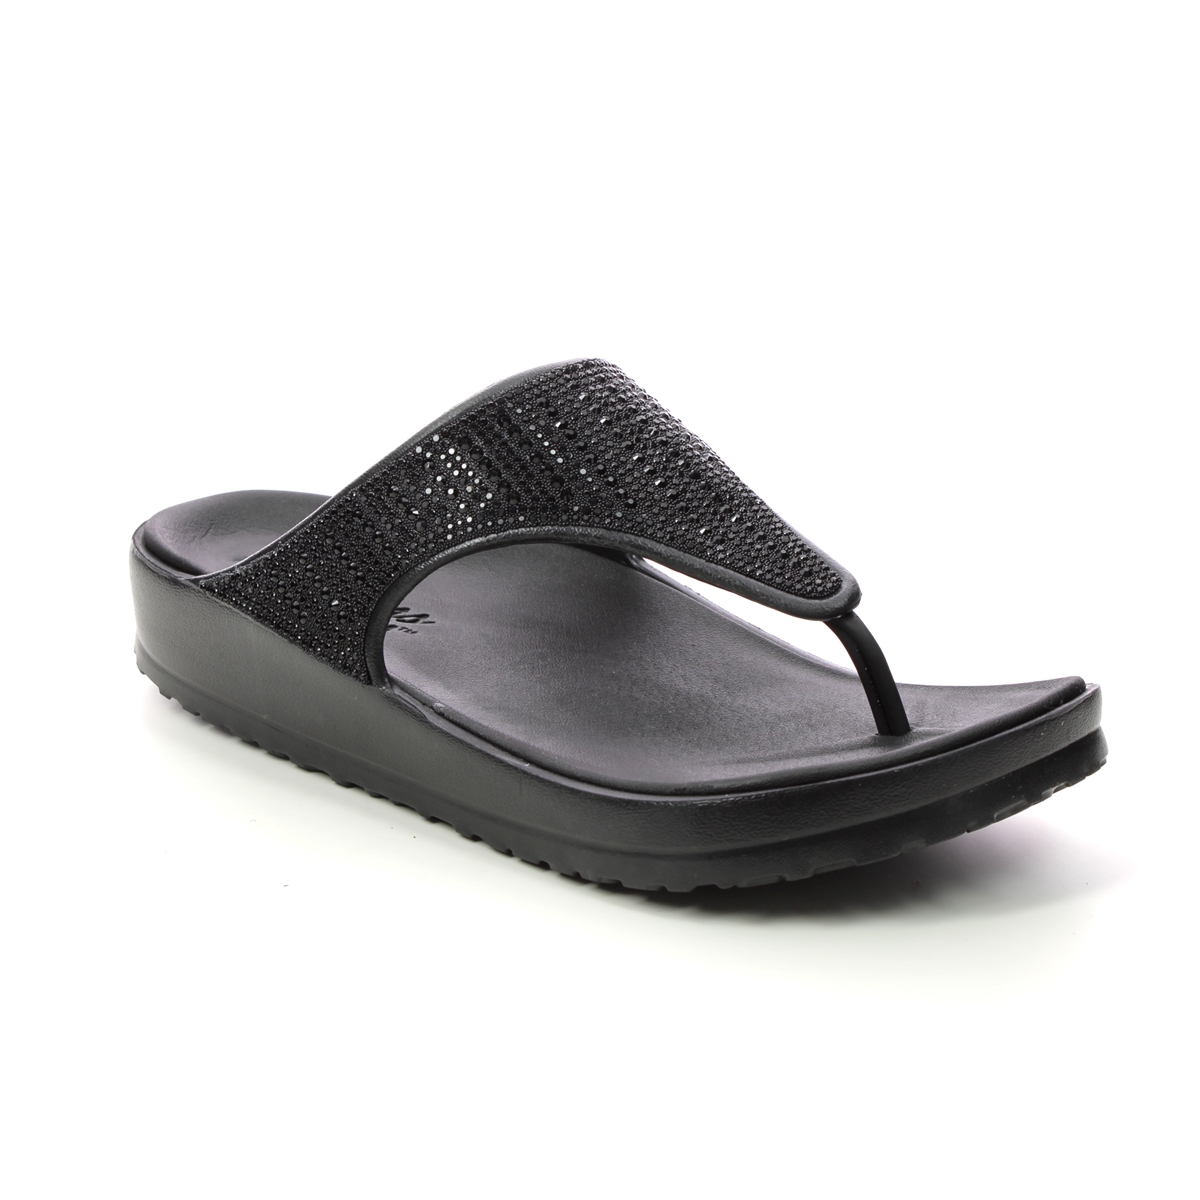 Skechers Cali Breeze 2 BBK Black Womens Toe Post Sandals 111016 in a Plain Man-made in Size 6